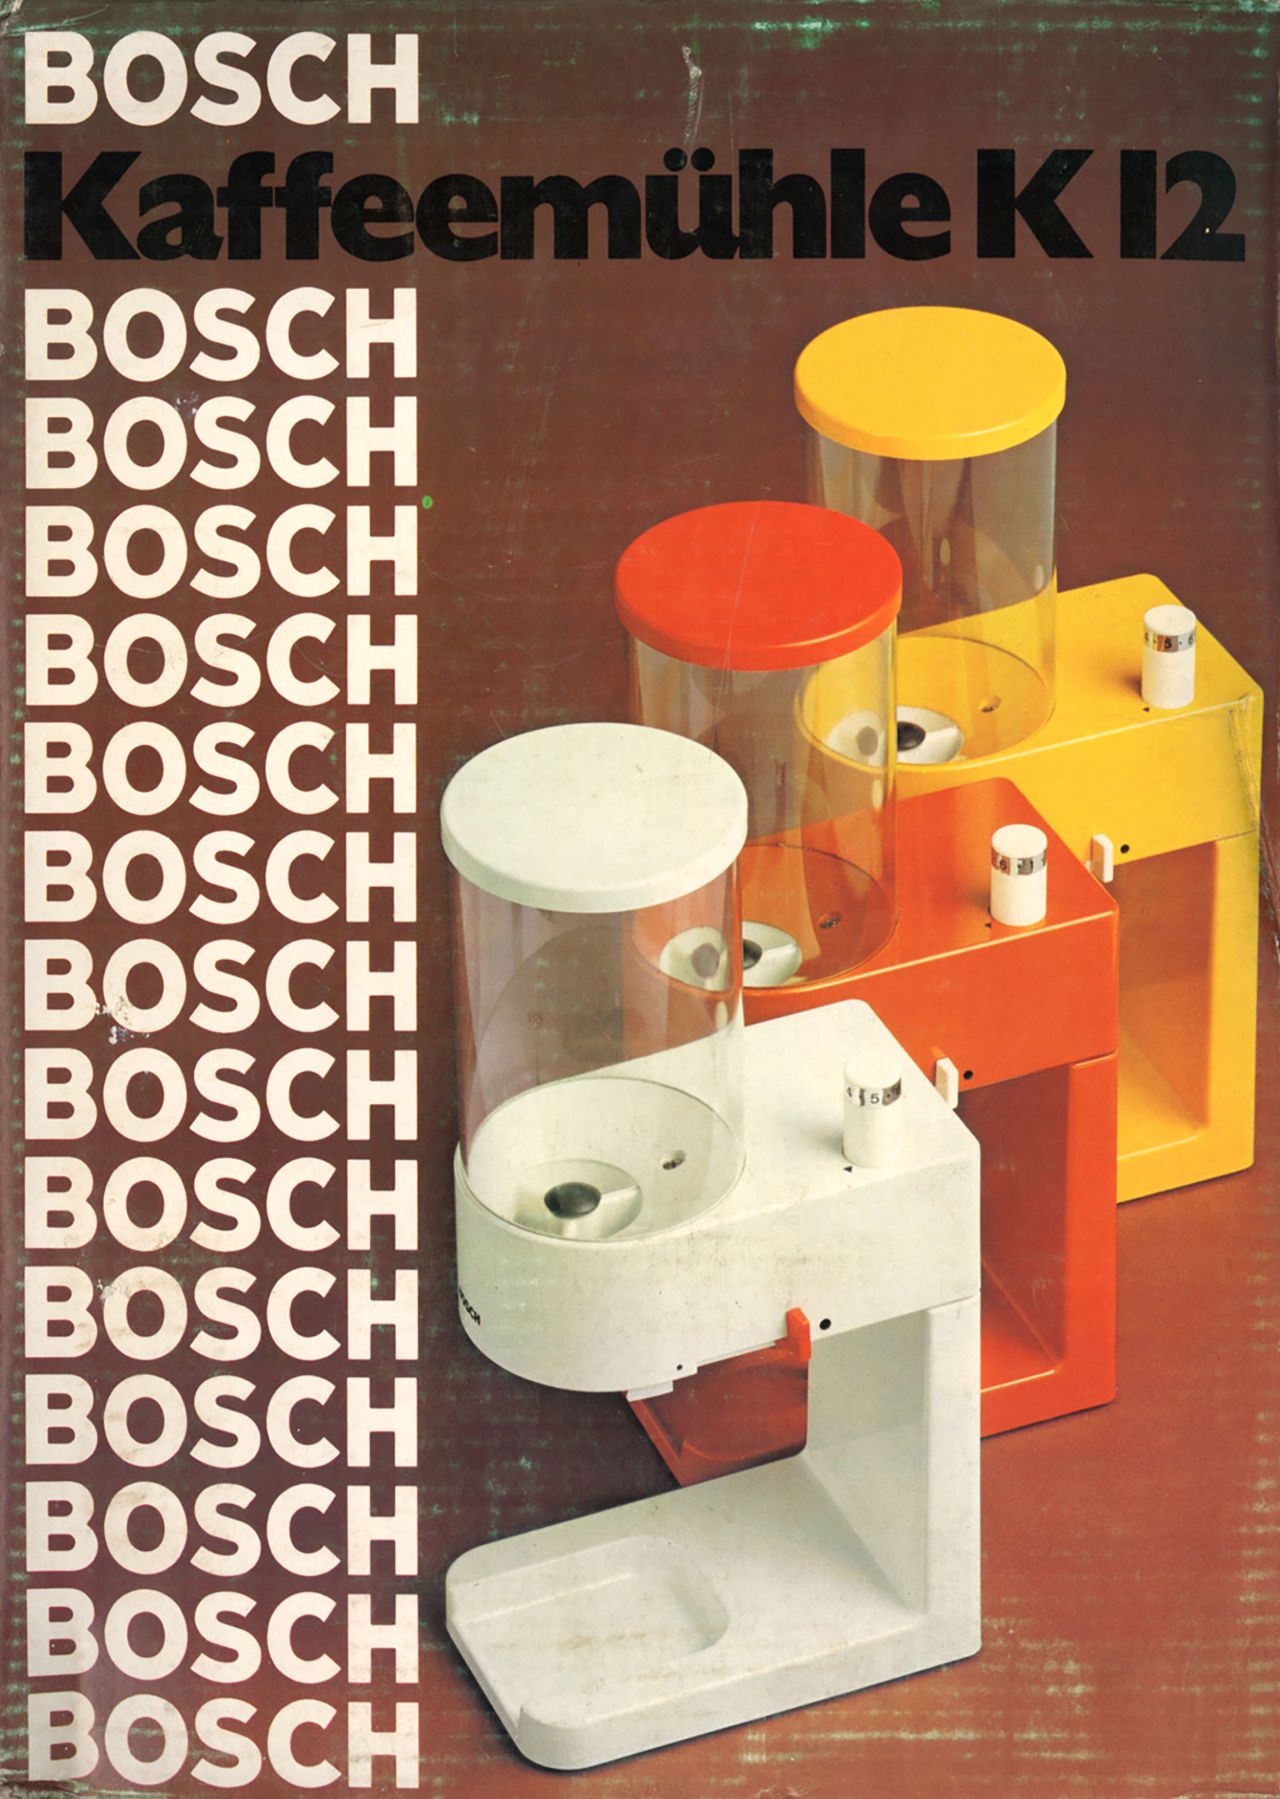 Bosch Kaffeemühle K12.